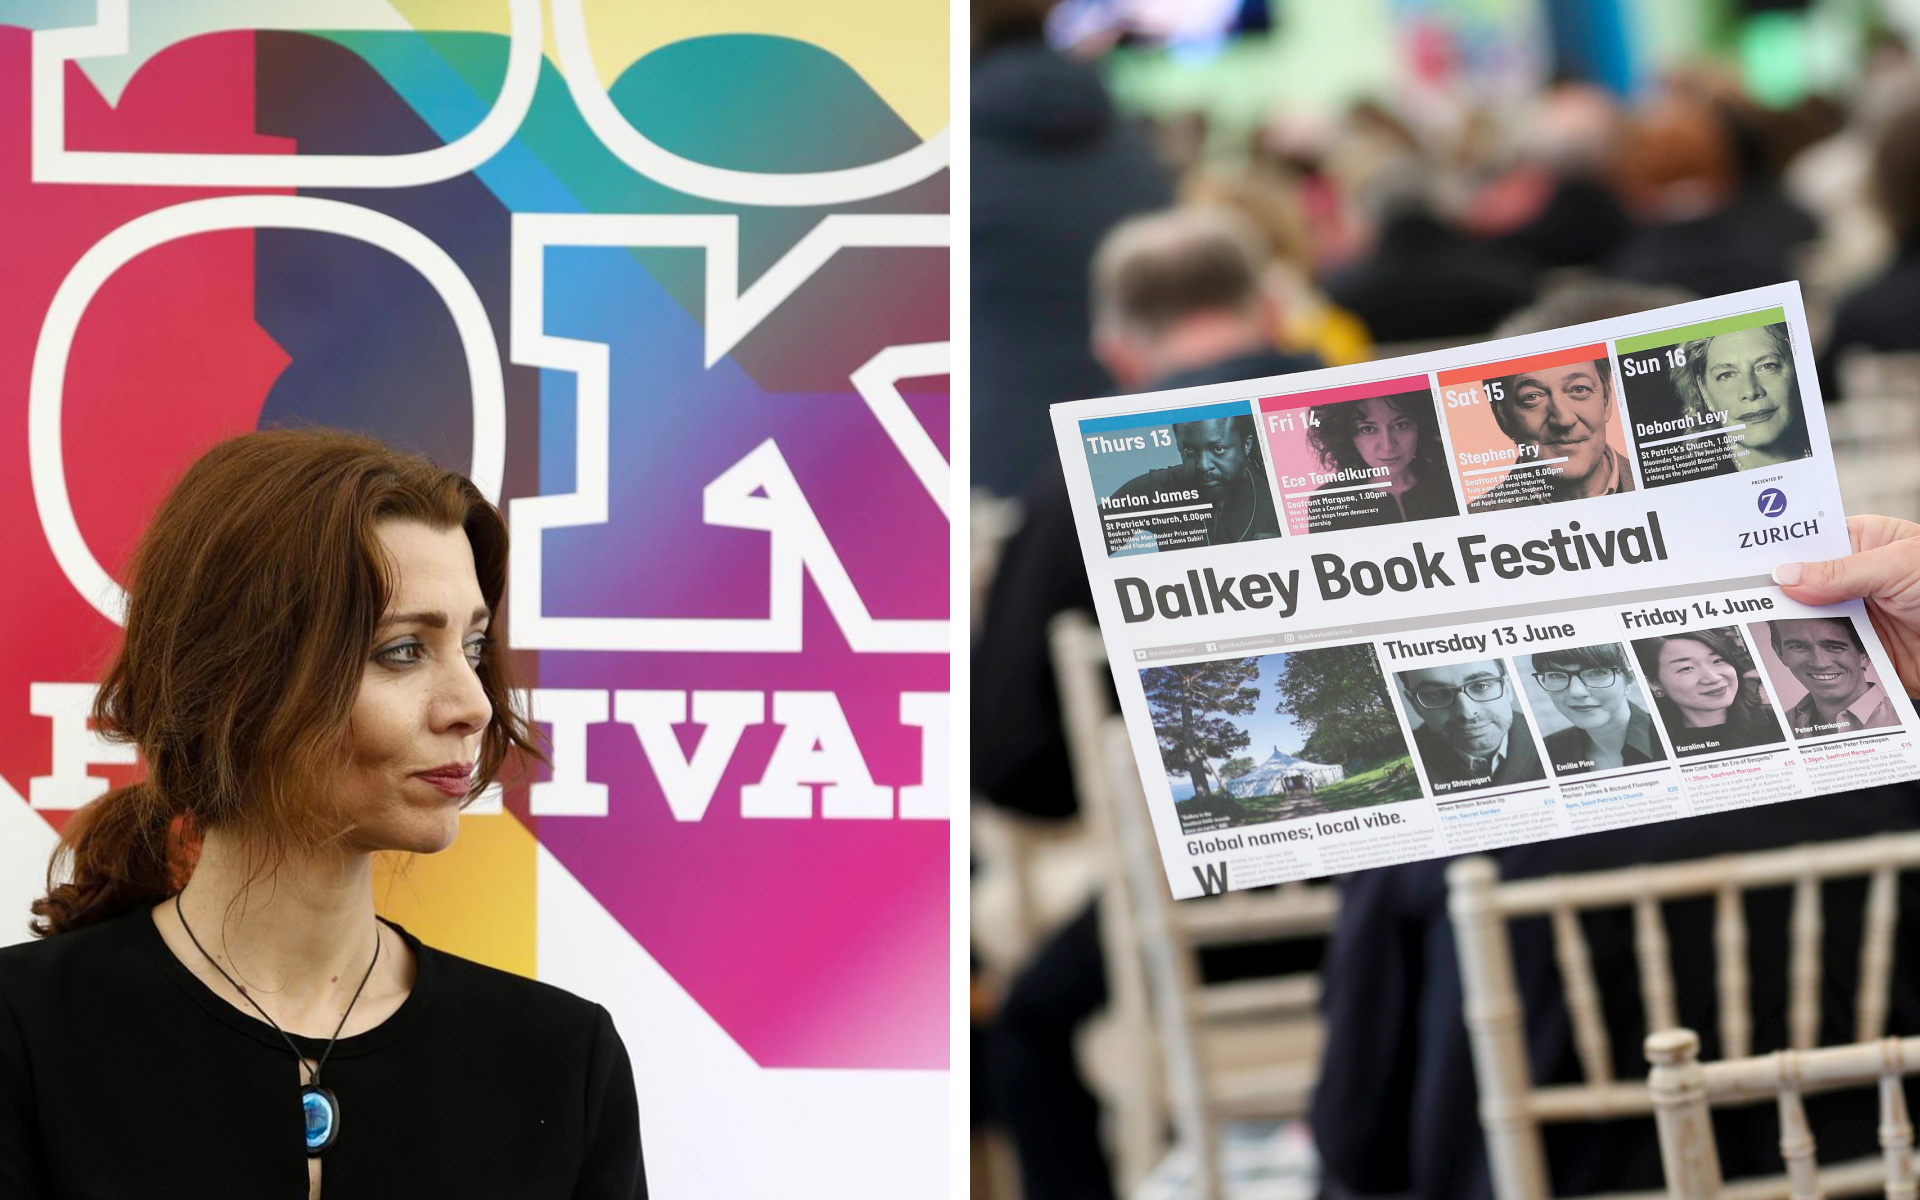 Dalkey Book Festival